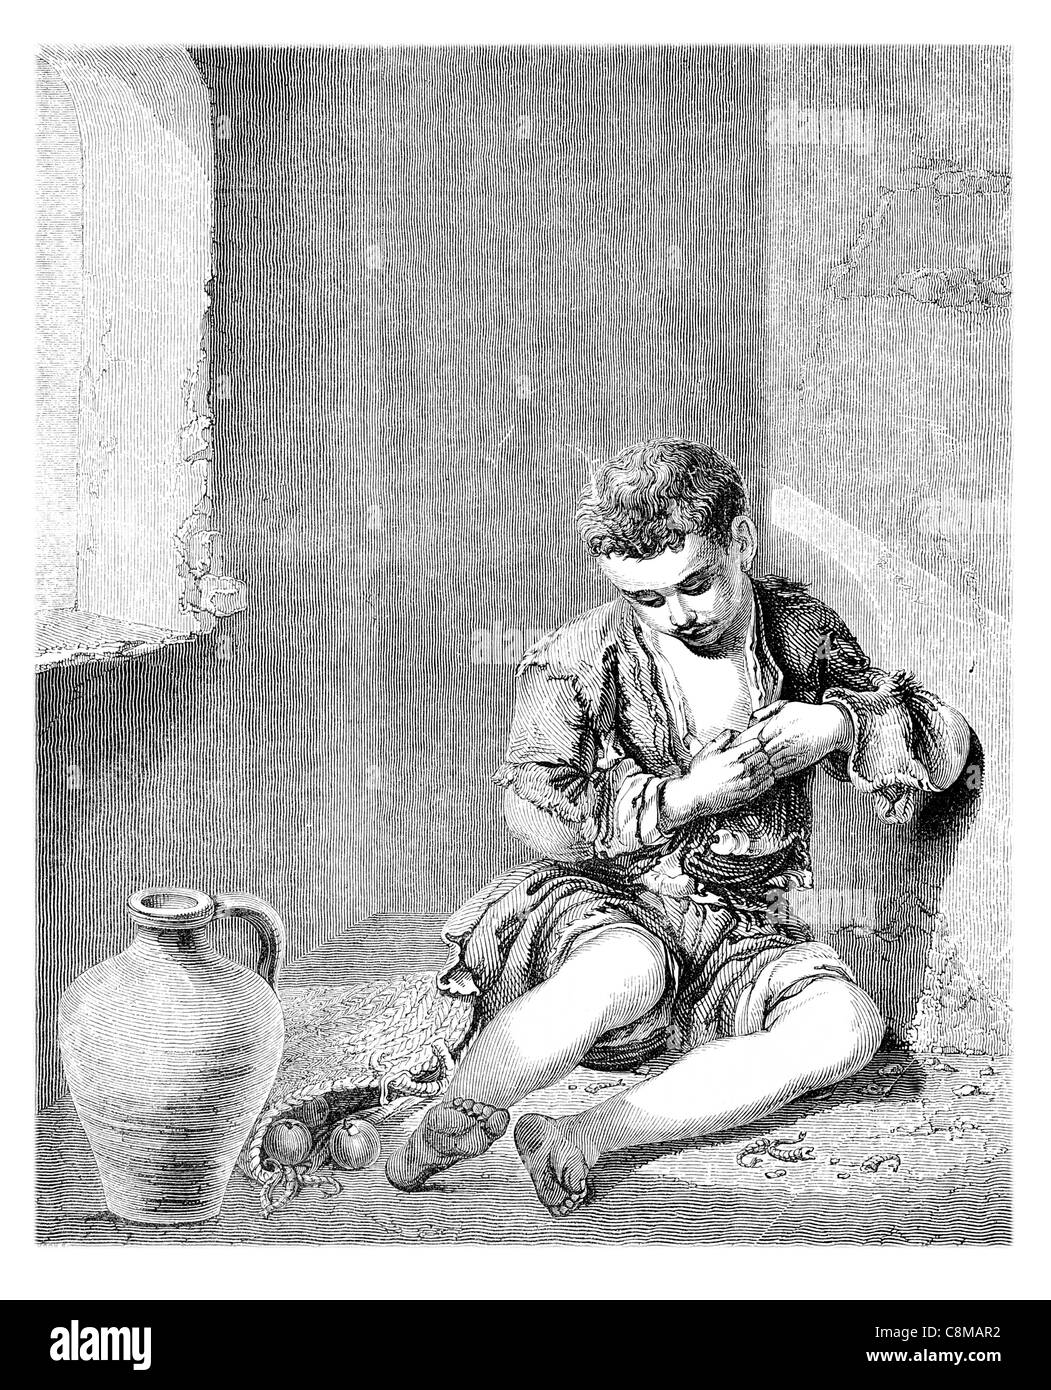 Young beggar Bartolomé Esteban Murillo 1617 1682 Spanish Baroque painter children child begging beg begged poor peasant lonely Stock Photo